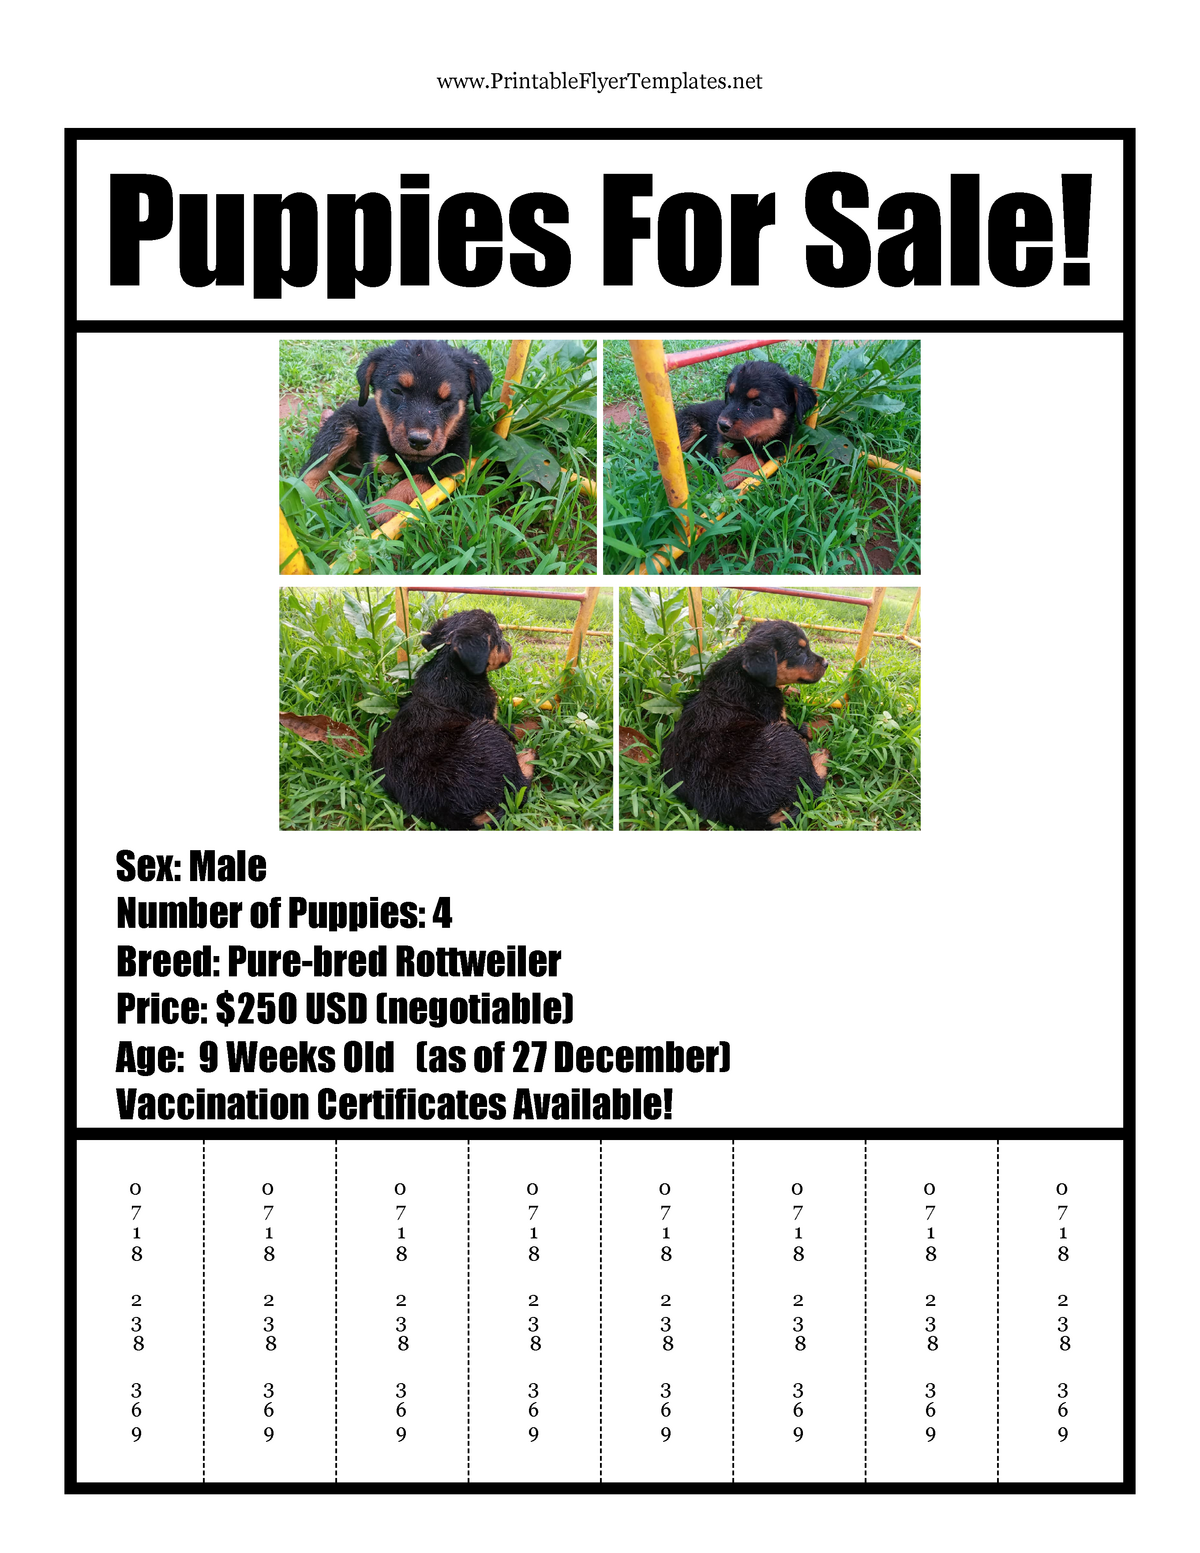 Puppies For Sale Flyer X Google Docs Web Applications Development